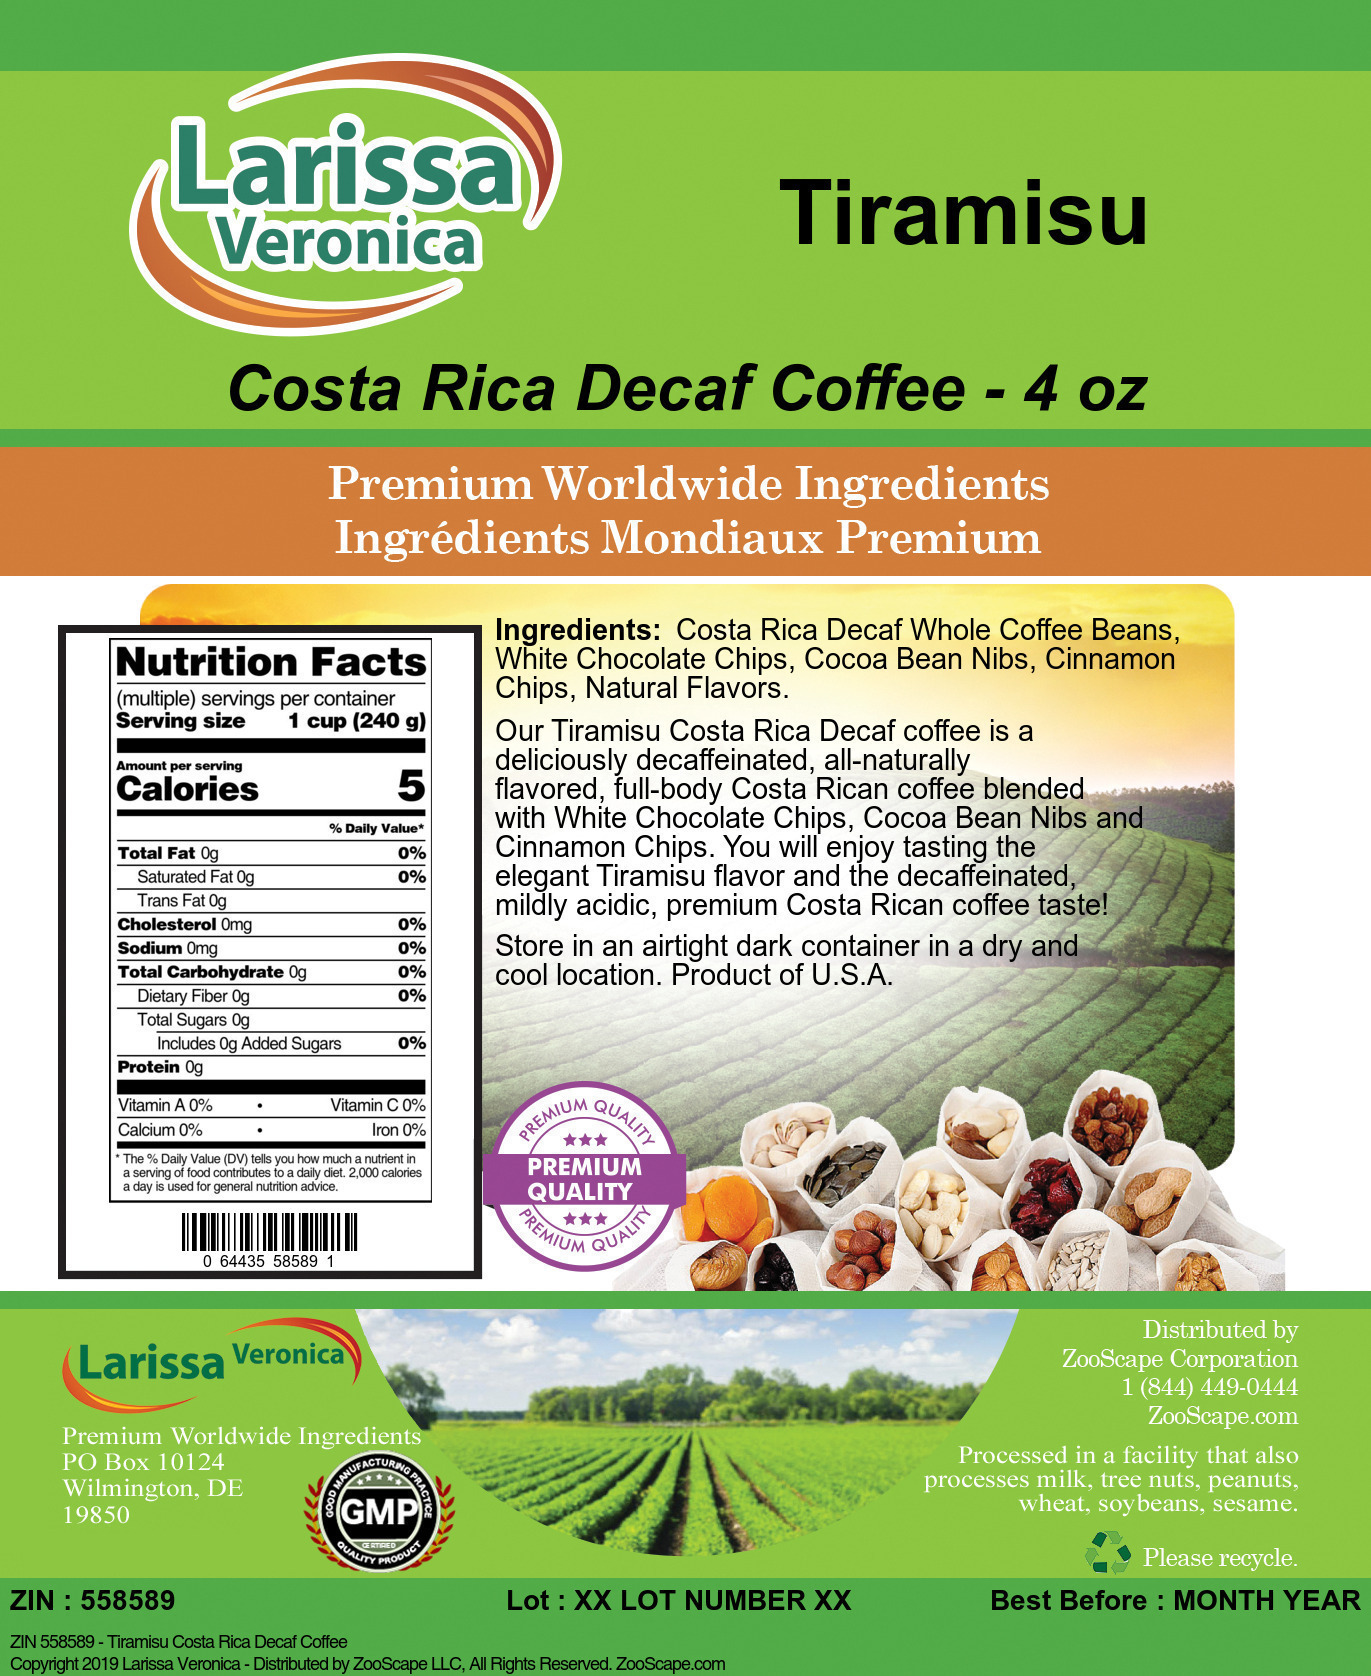 Tiramisu Costa Rica Decaf Coffee - Label